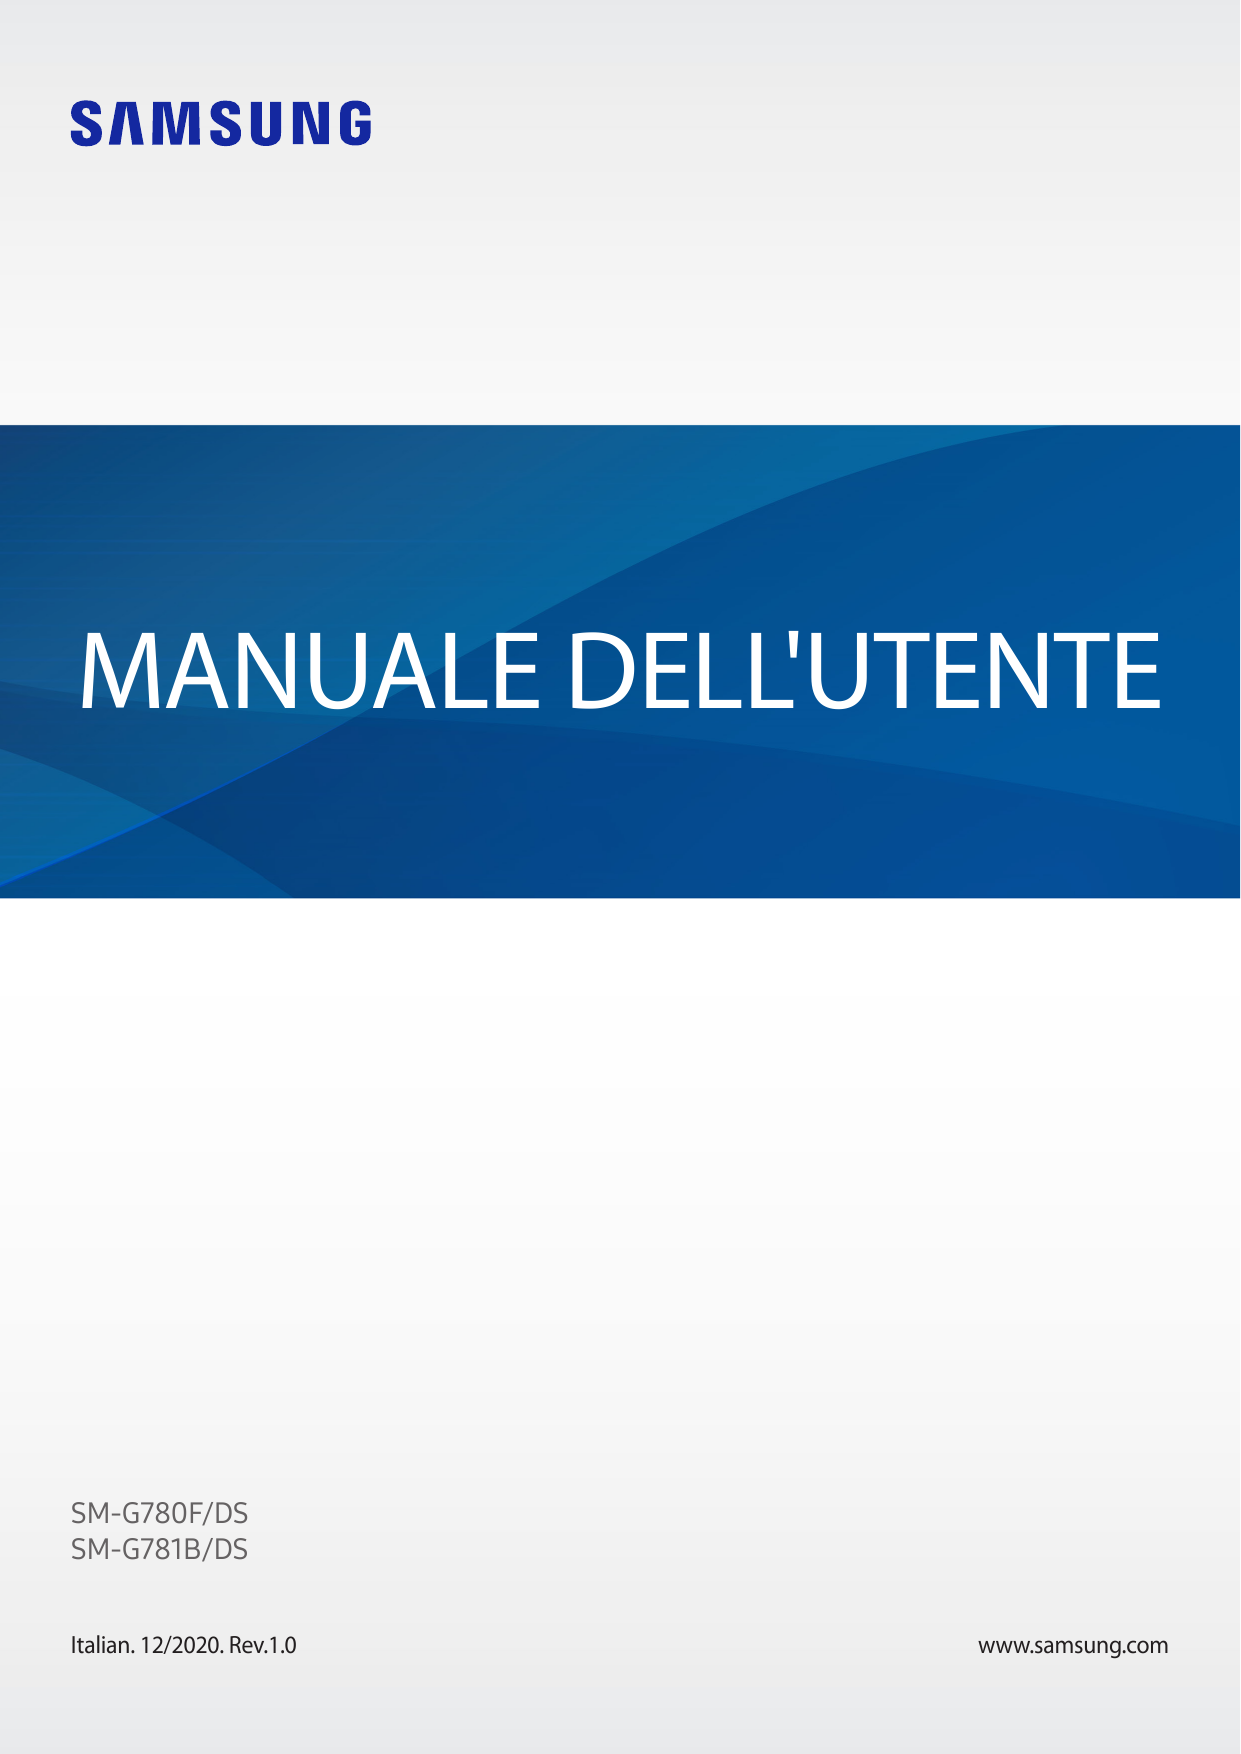 MANUALE DELL'UTENTESM-G780F/DSSM-G781B/DSItalian. 12/2020. Rev.1.0www.samsung.com